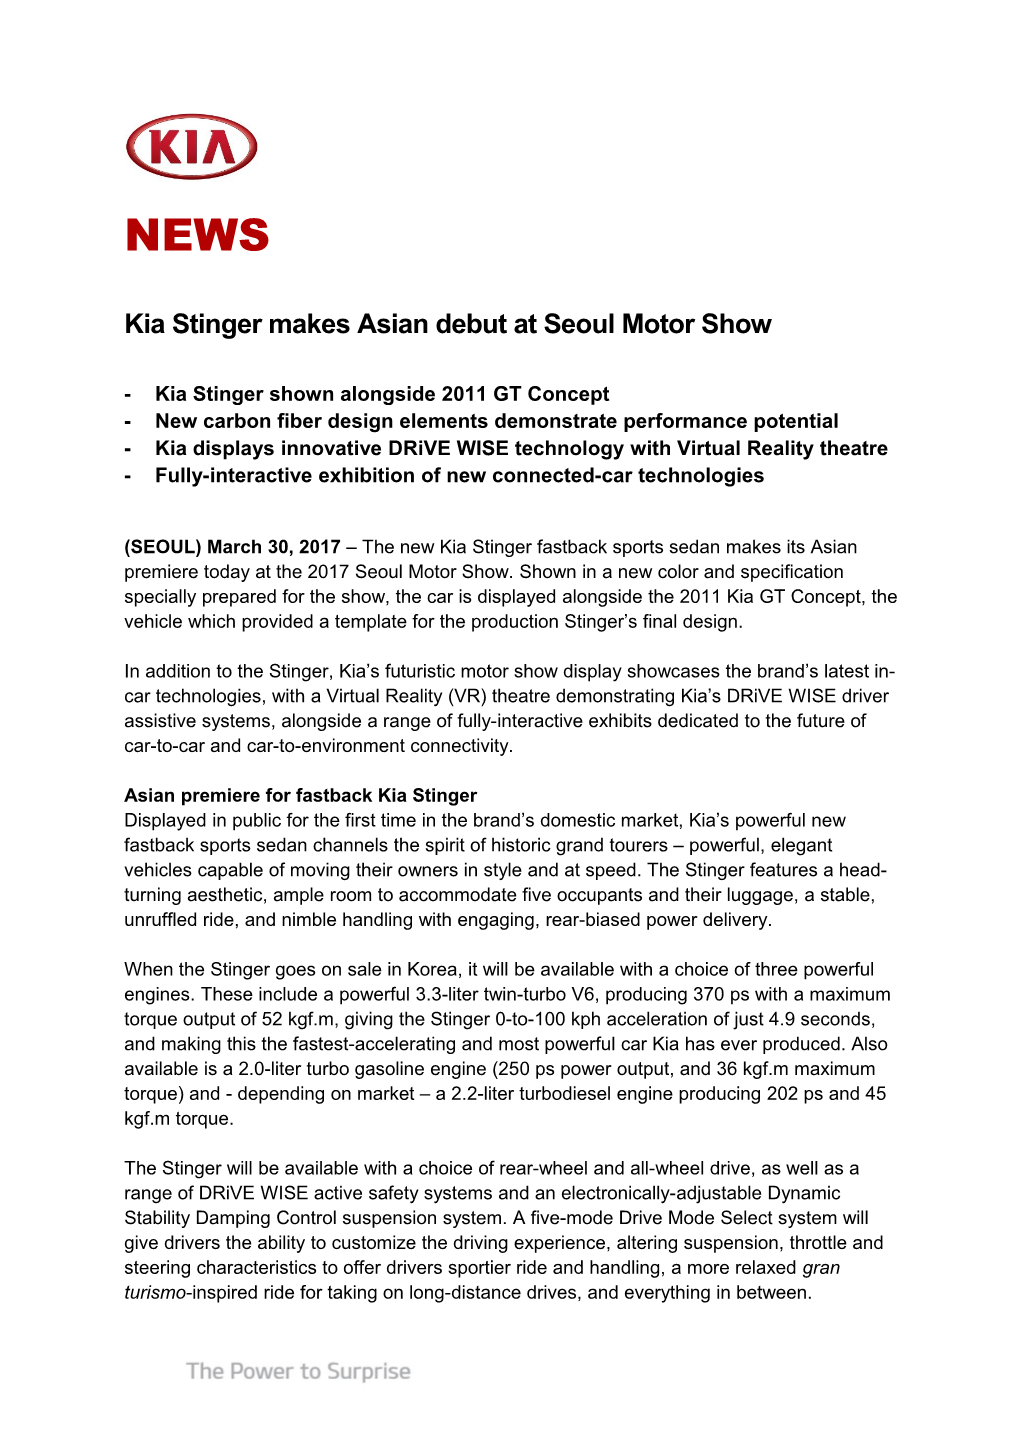 Kia Stinger Makes Asian Debut at Seoul Motor Show